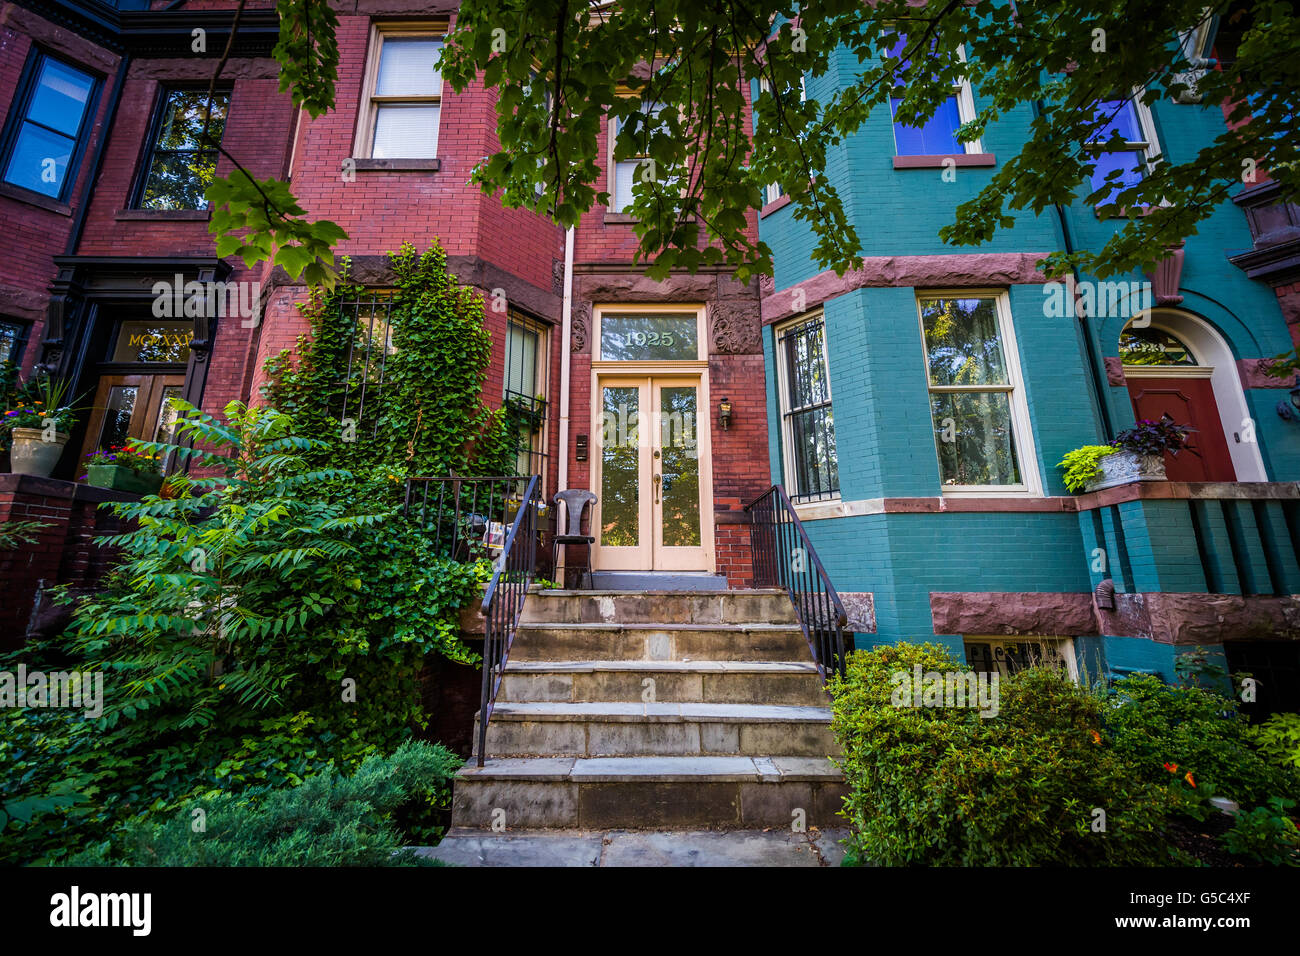 Colorful row houses in Washington, DC. Stock Photo